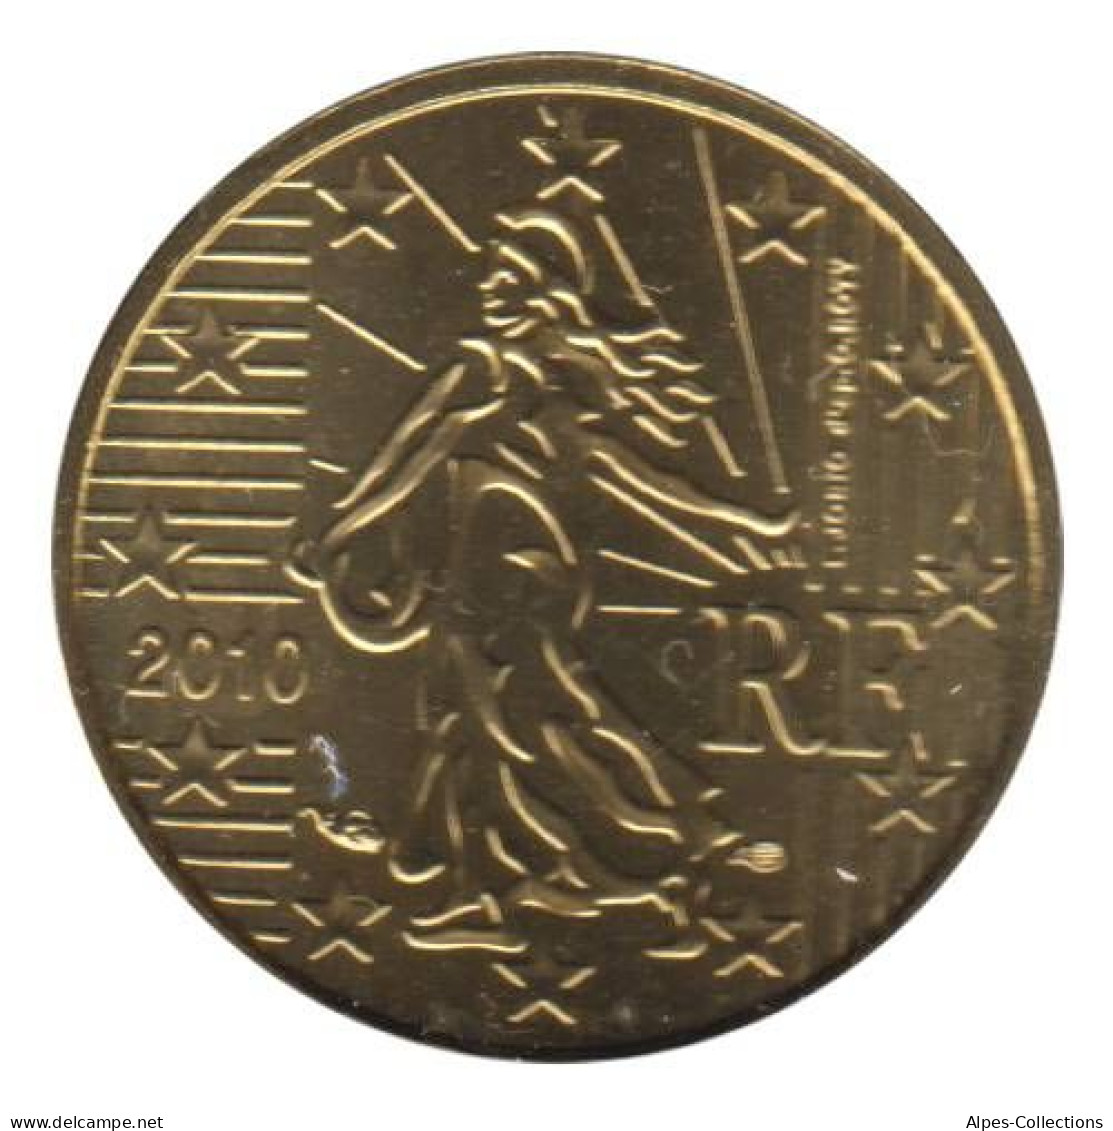 FR01010.2 - FRANCE - 10 Cents - 2010 - BU - France